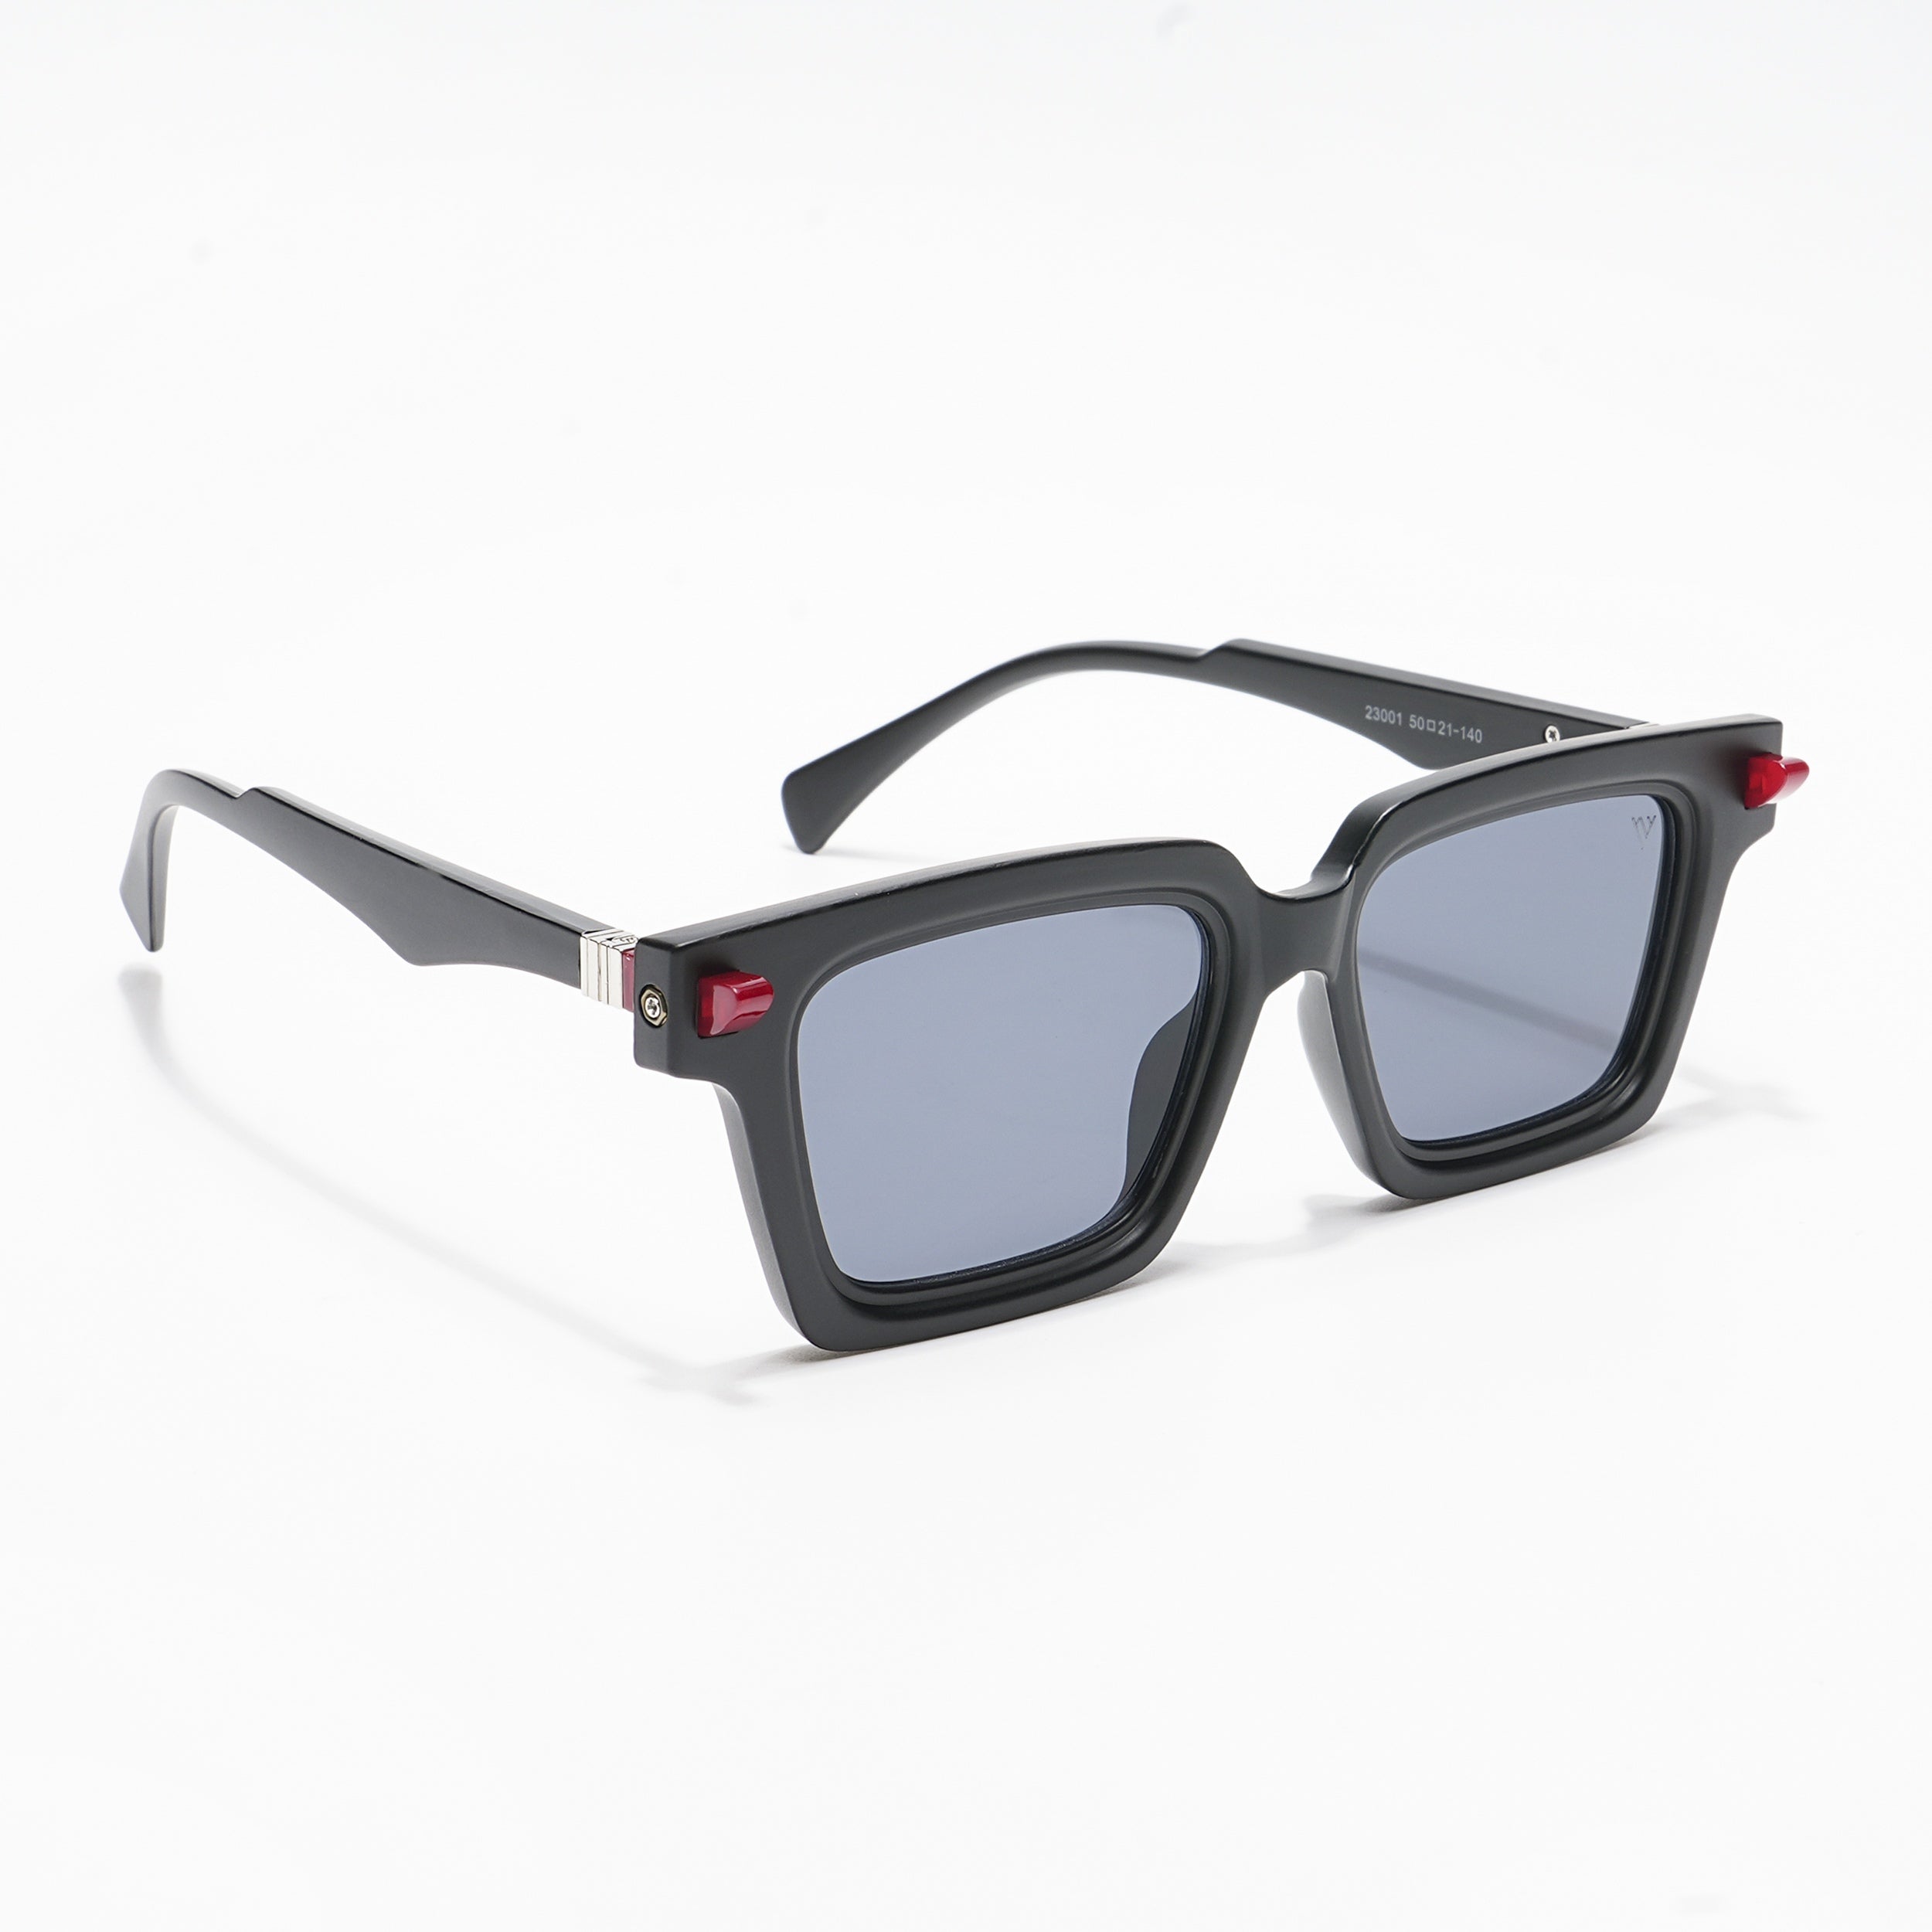 Voyage Matt Black Square Sunglasses for Men & Women - MG4876